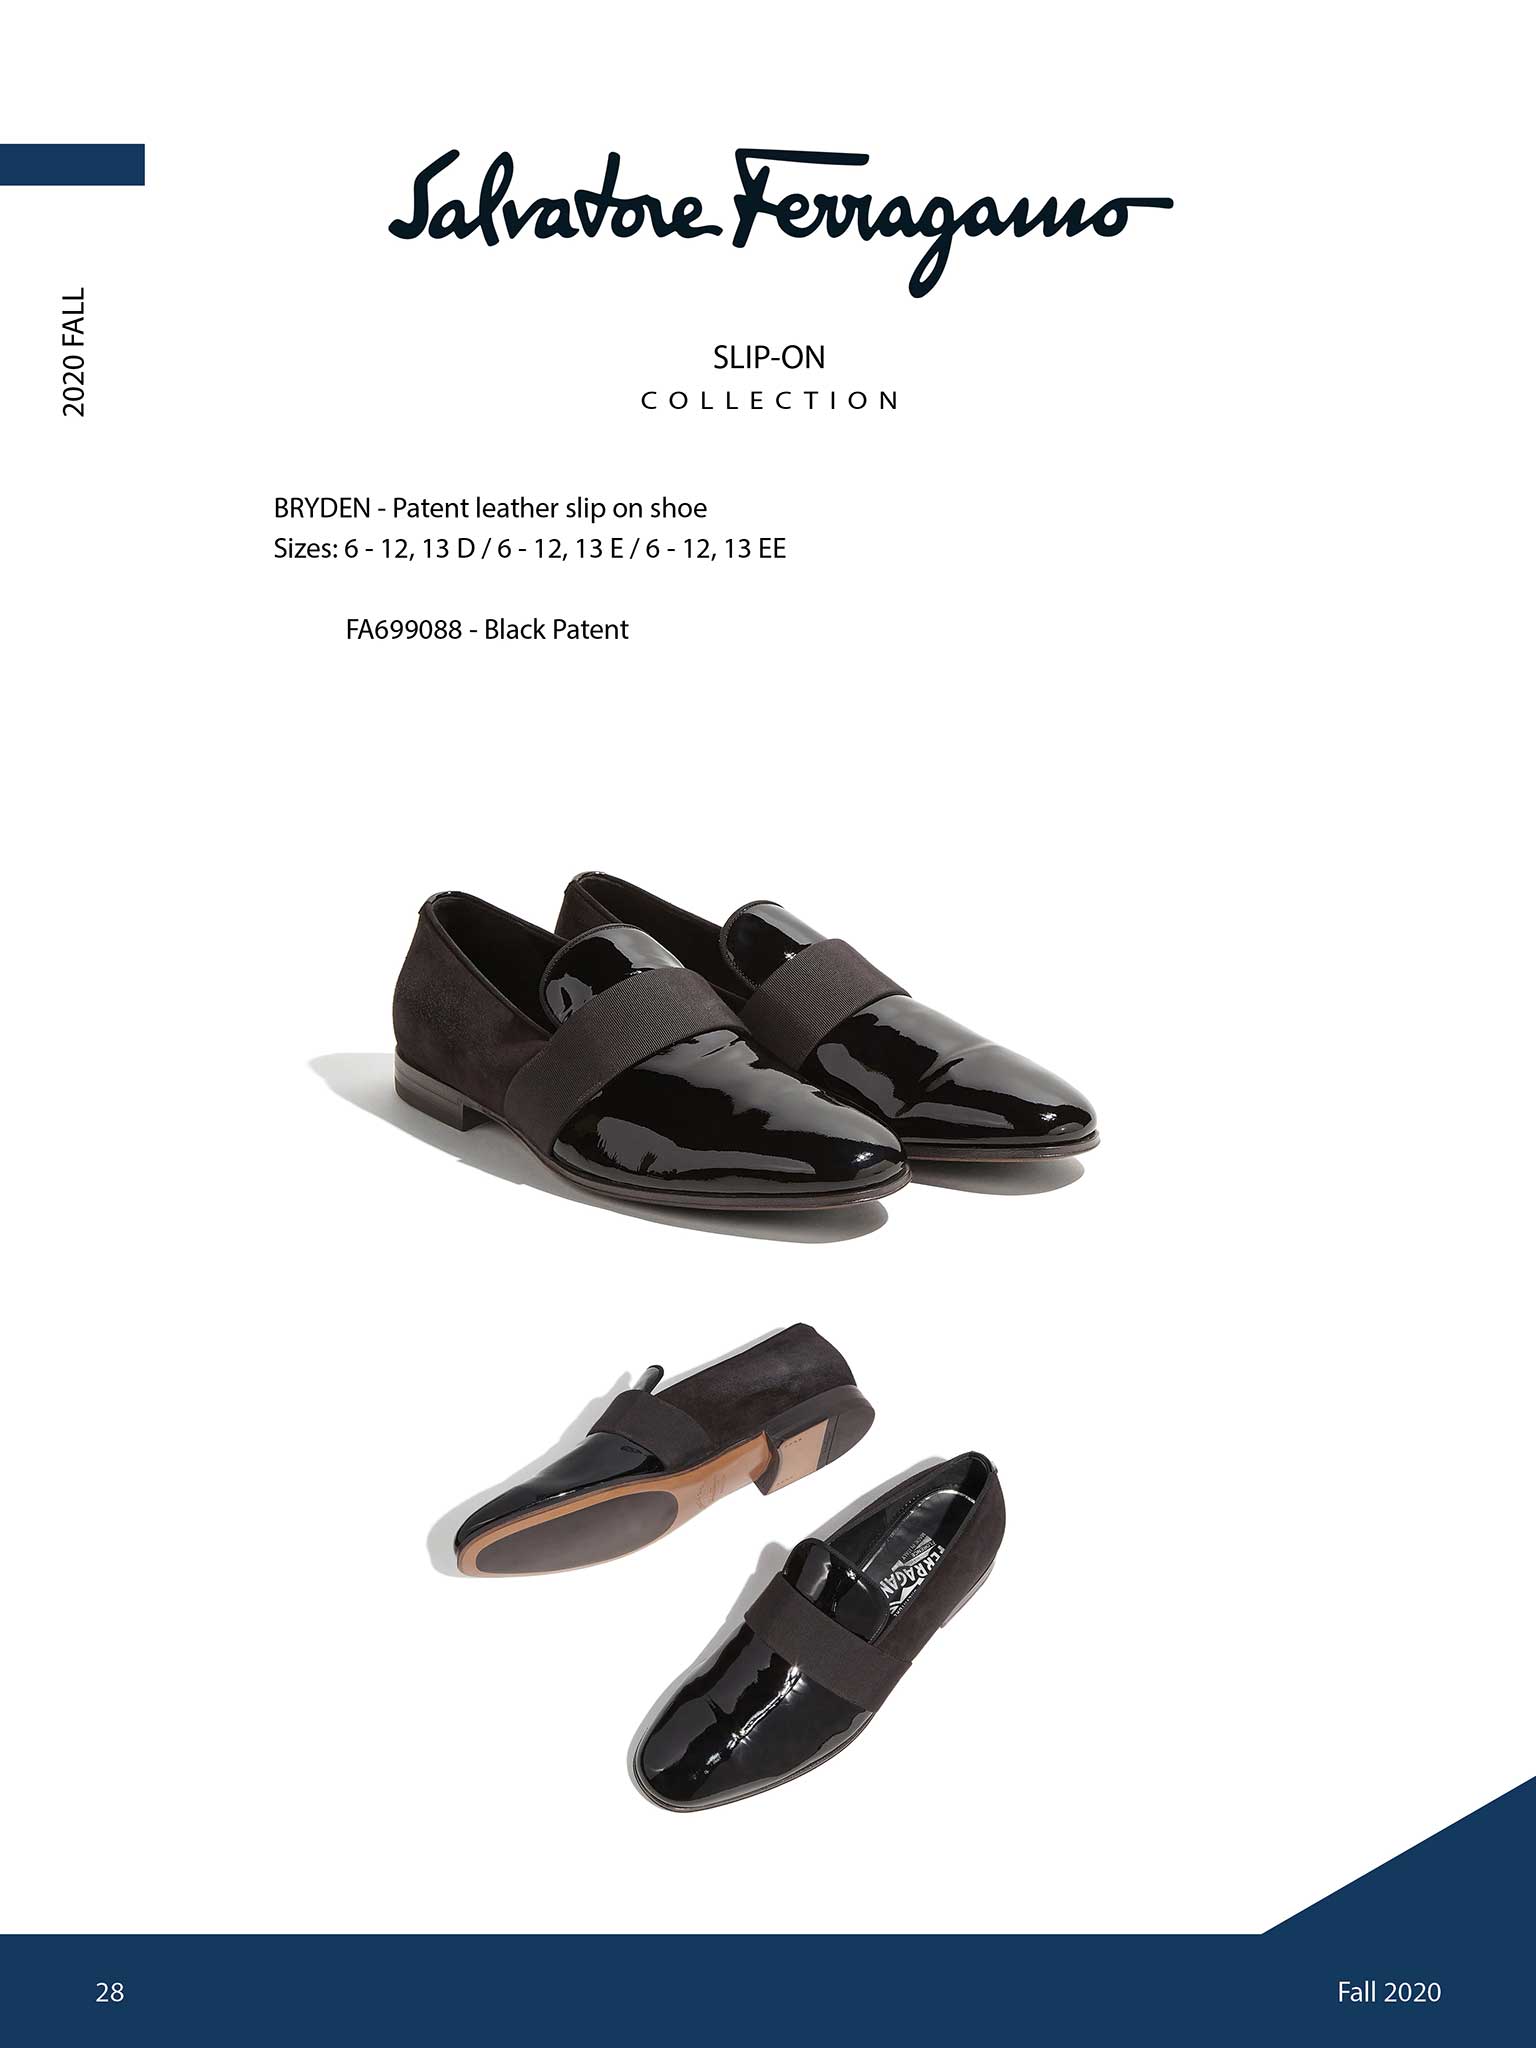 Ferragamo Shoes & Belts                                                                                                                                                                                                                                   , Bryden  by Salvatore Ferragamo